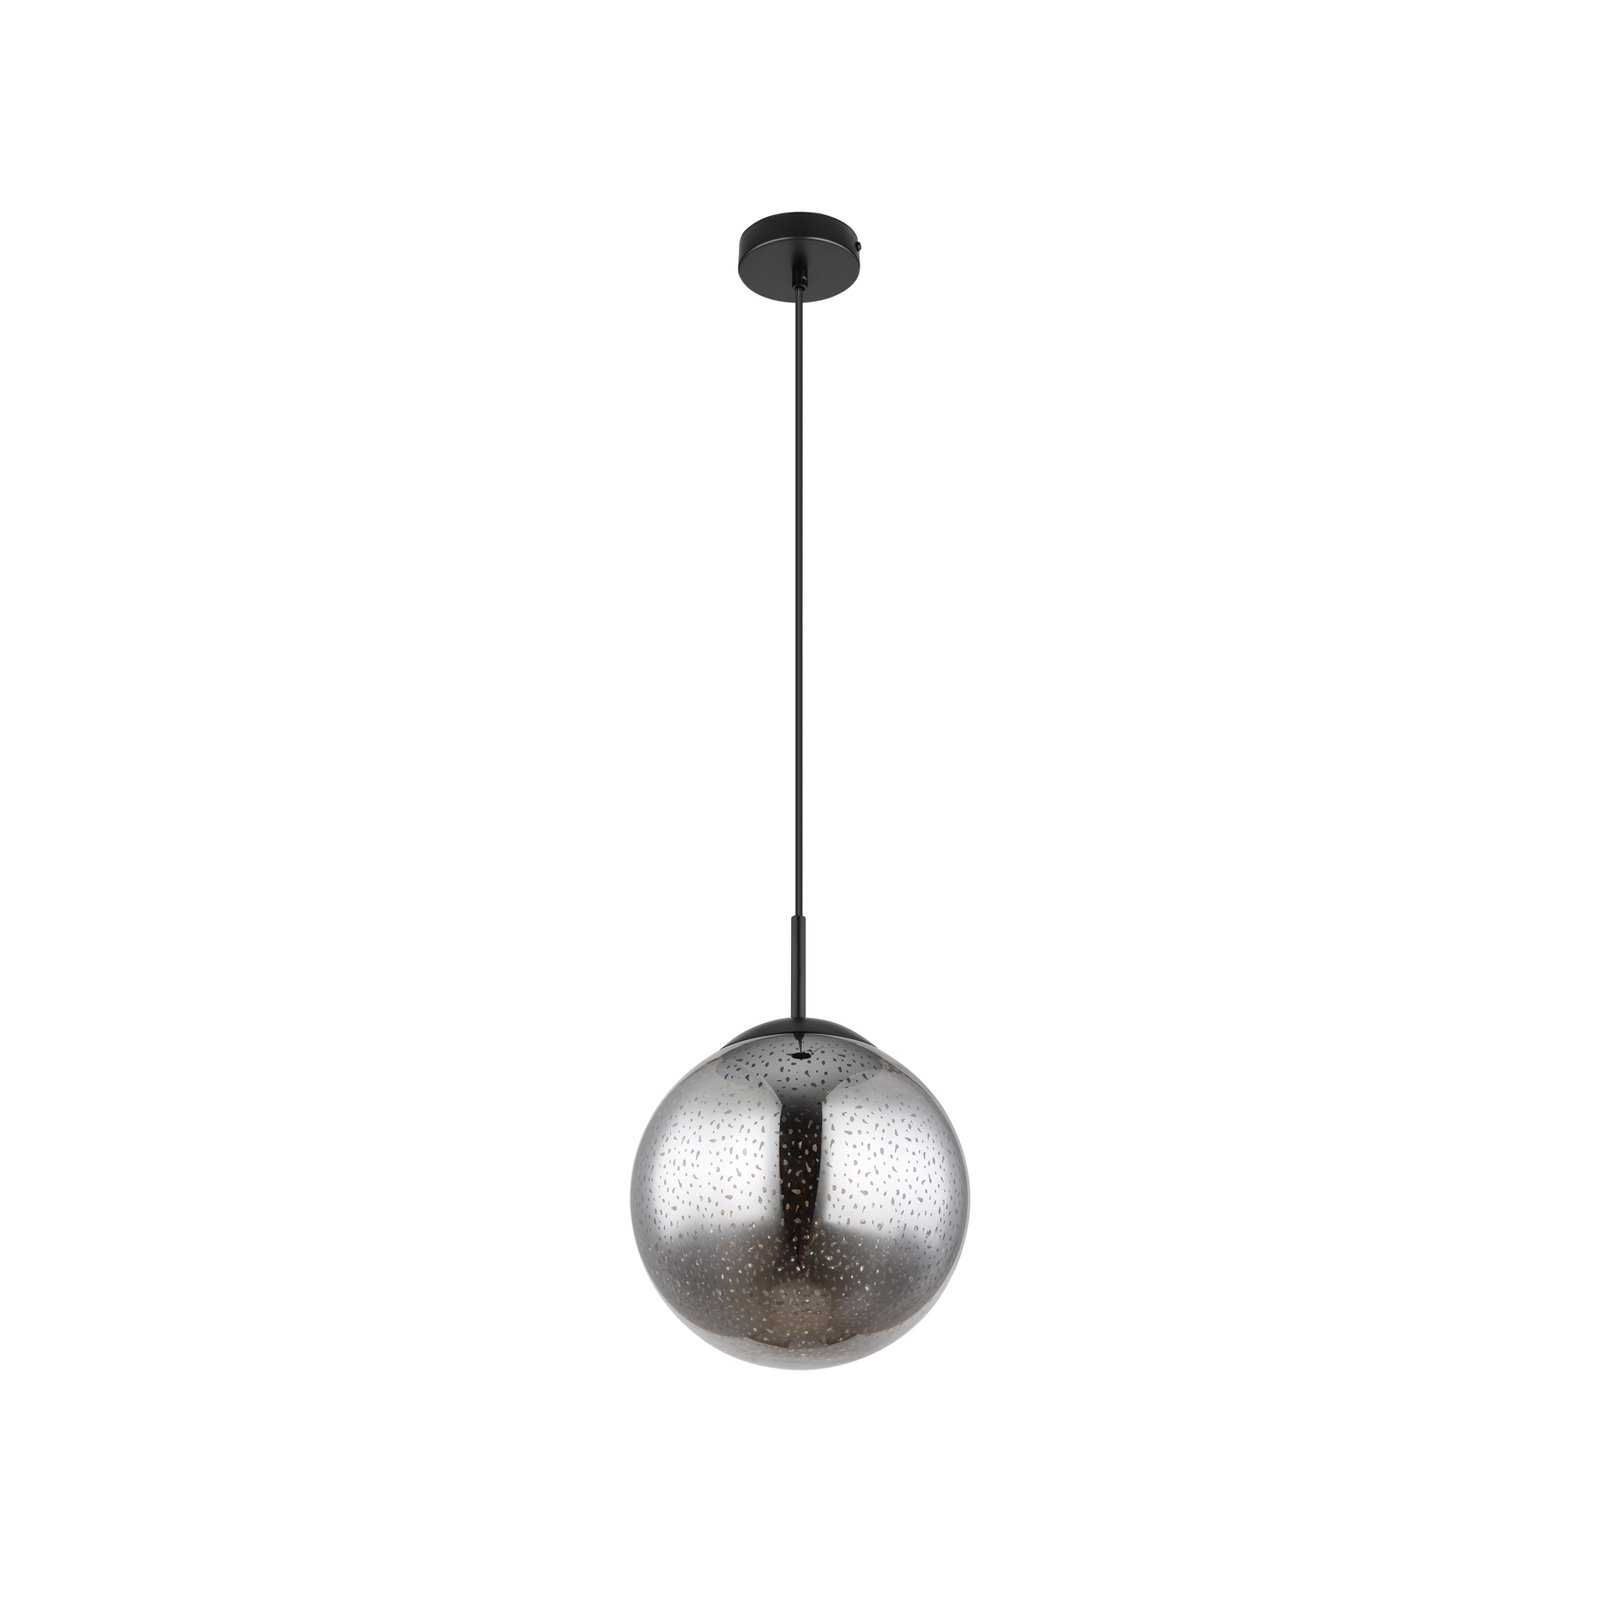 Samos pendant light, Ø 25 cm, smoky grey/black, glass